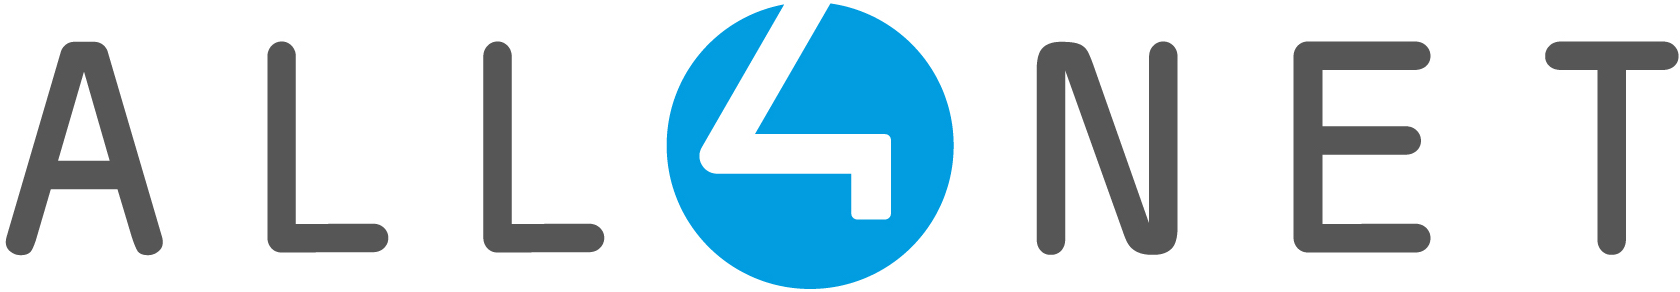 all4net Logo